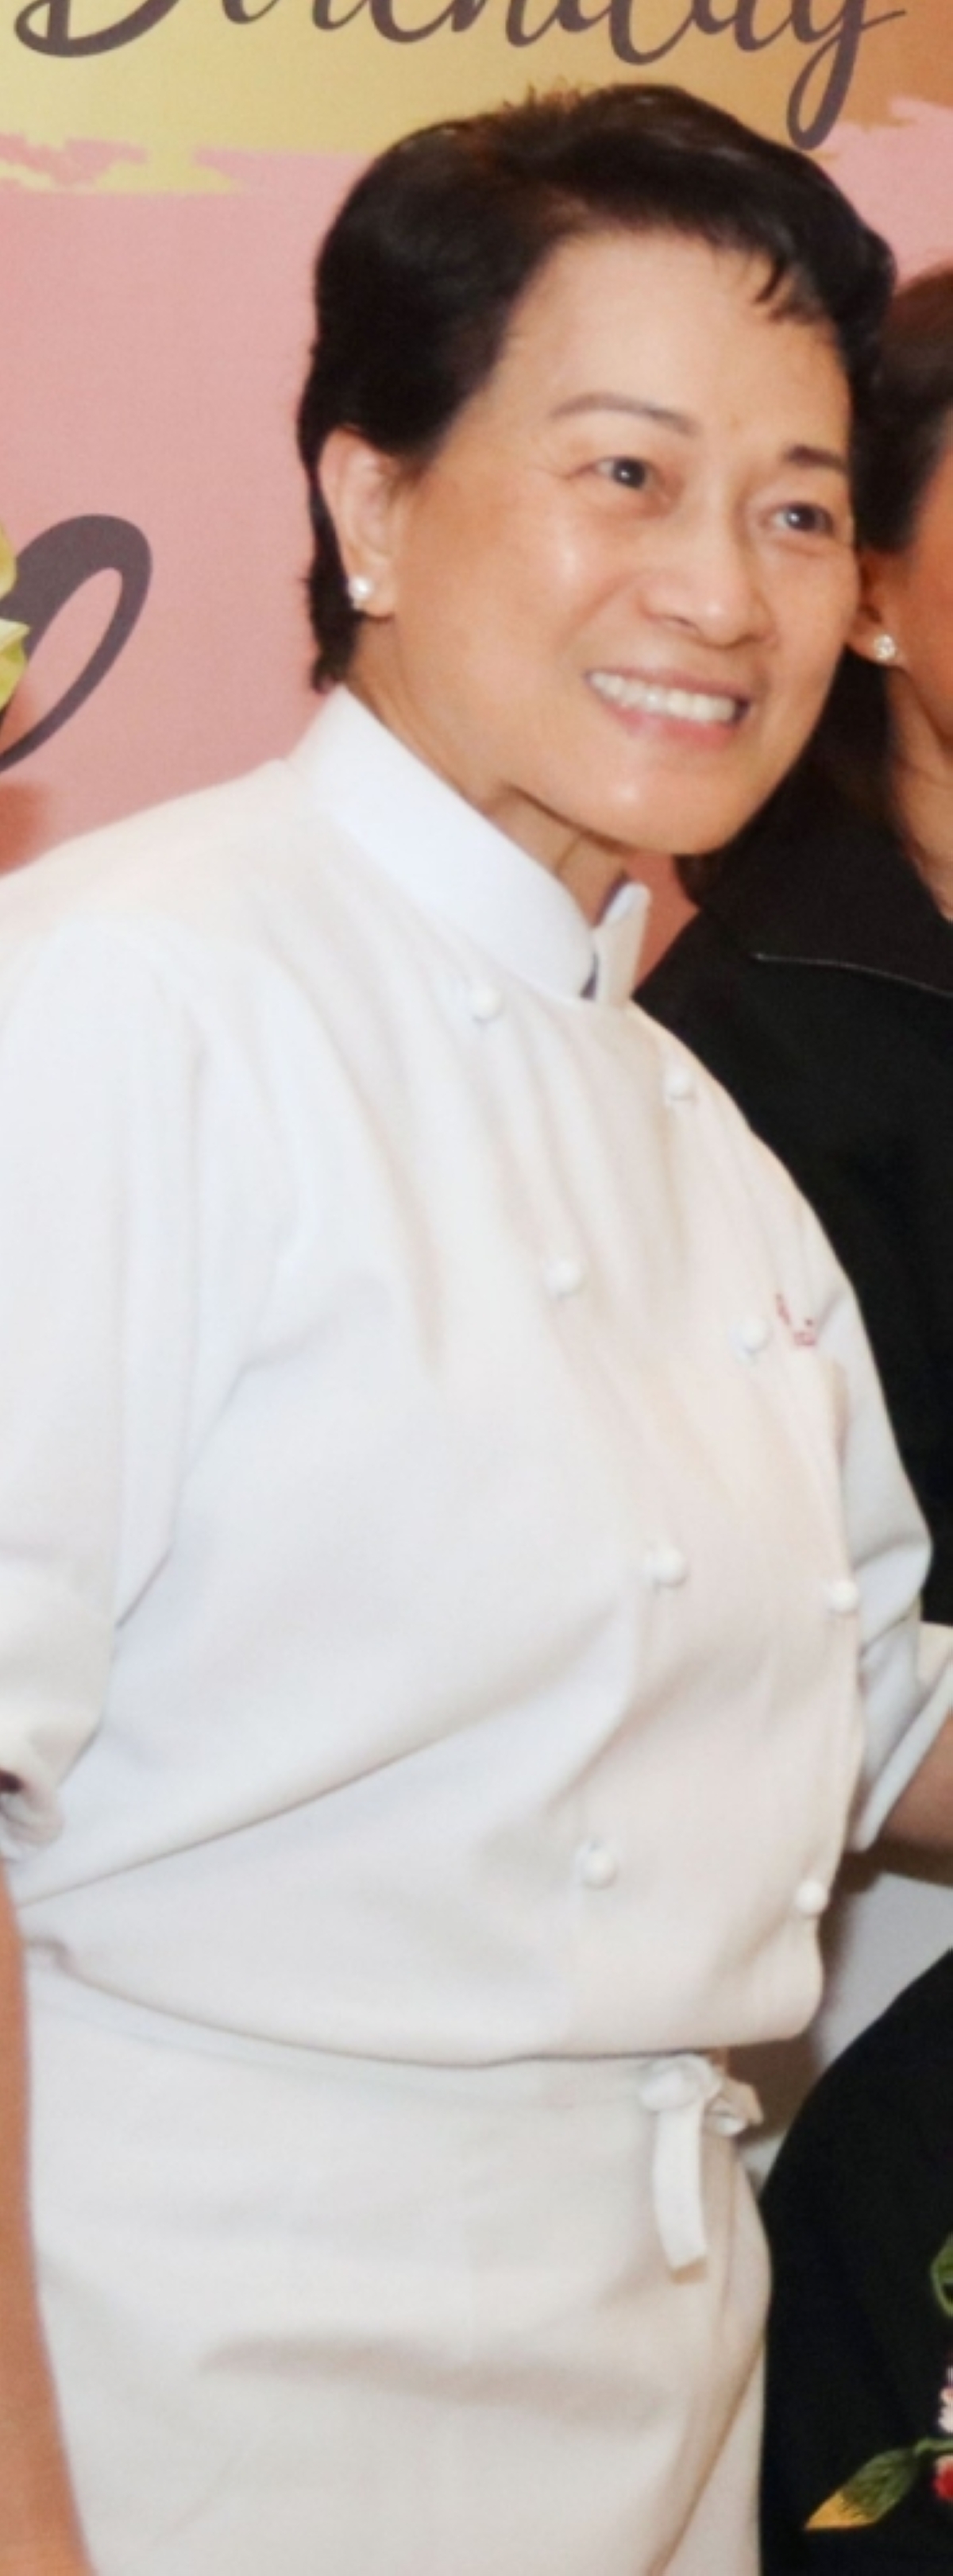 Chef Jessie Sincioco